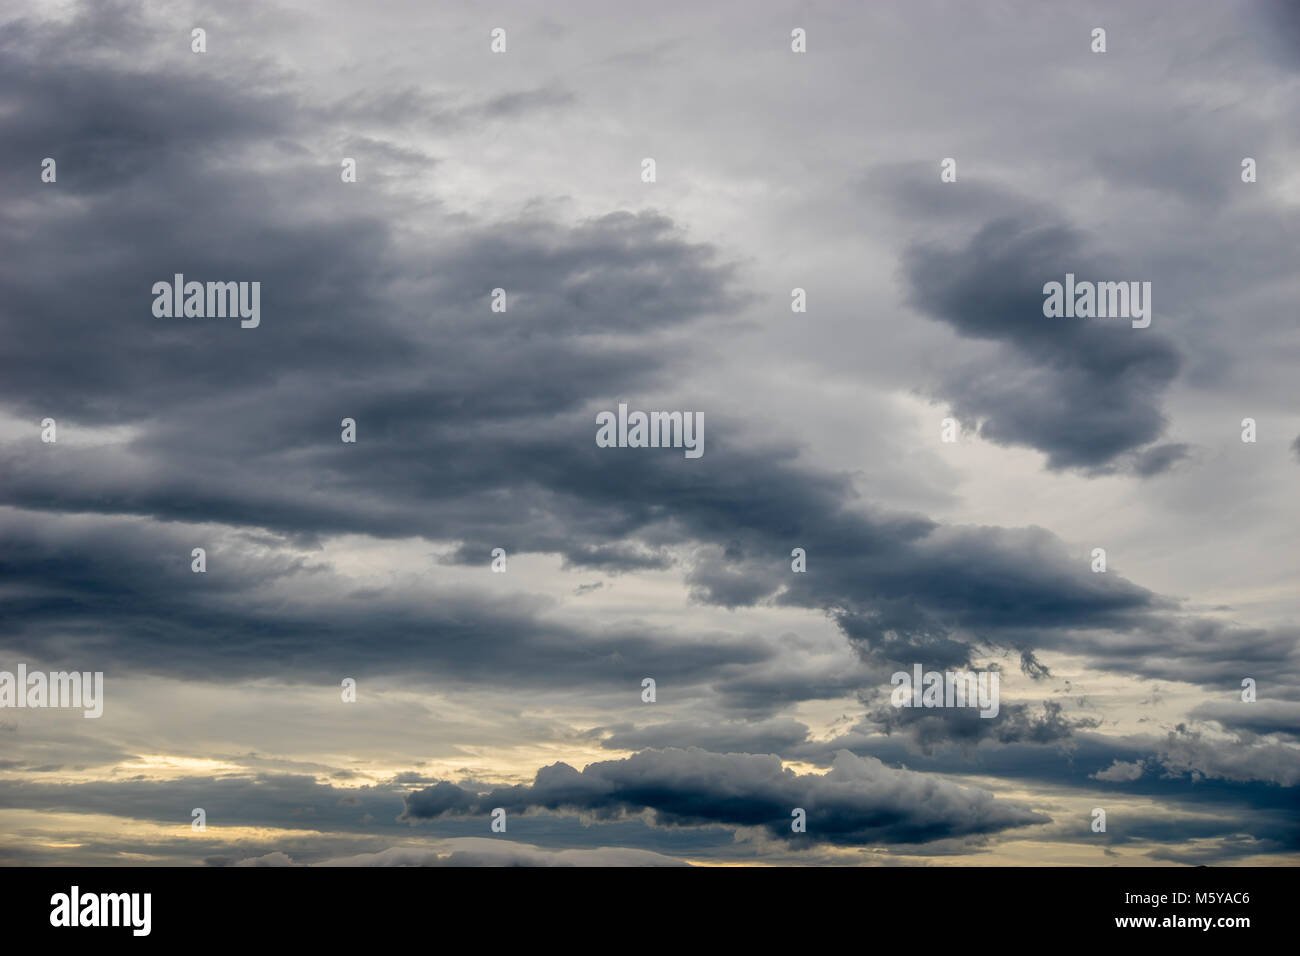 Rain clouds spread over the sky in rainy season Stock Photo